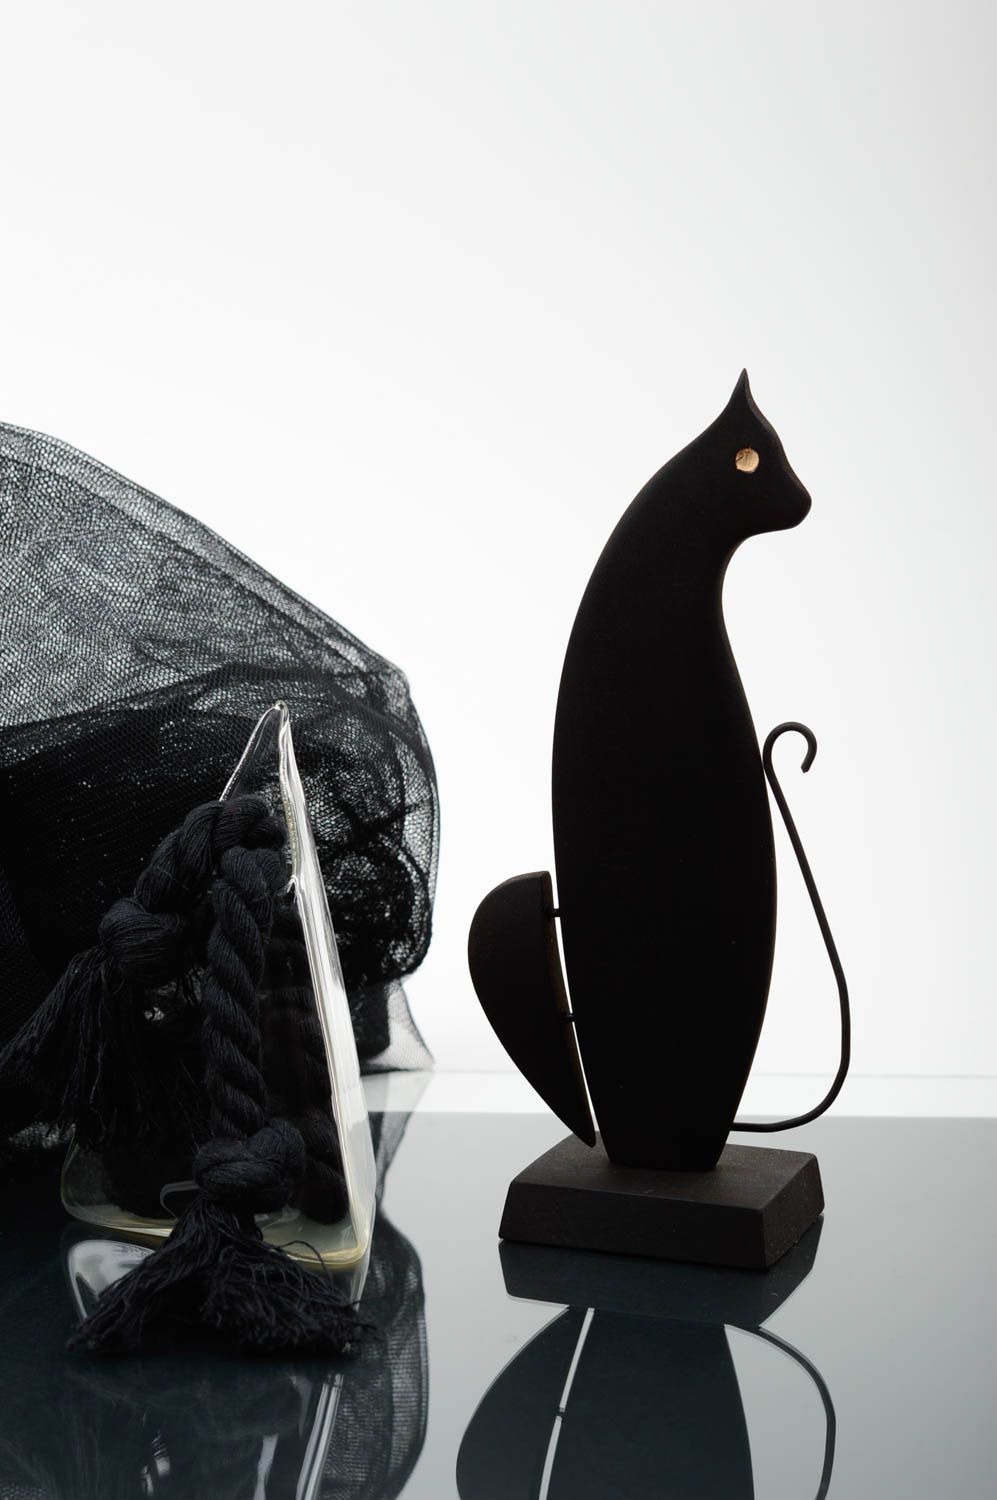 Handmade wooden figurine cat statuette designs contemporary art room decor ideas photo 1